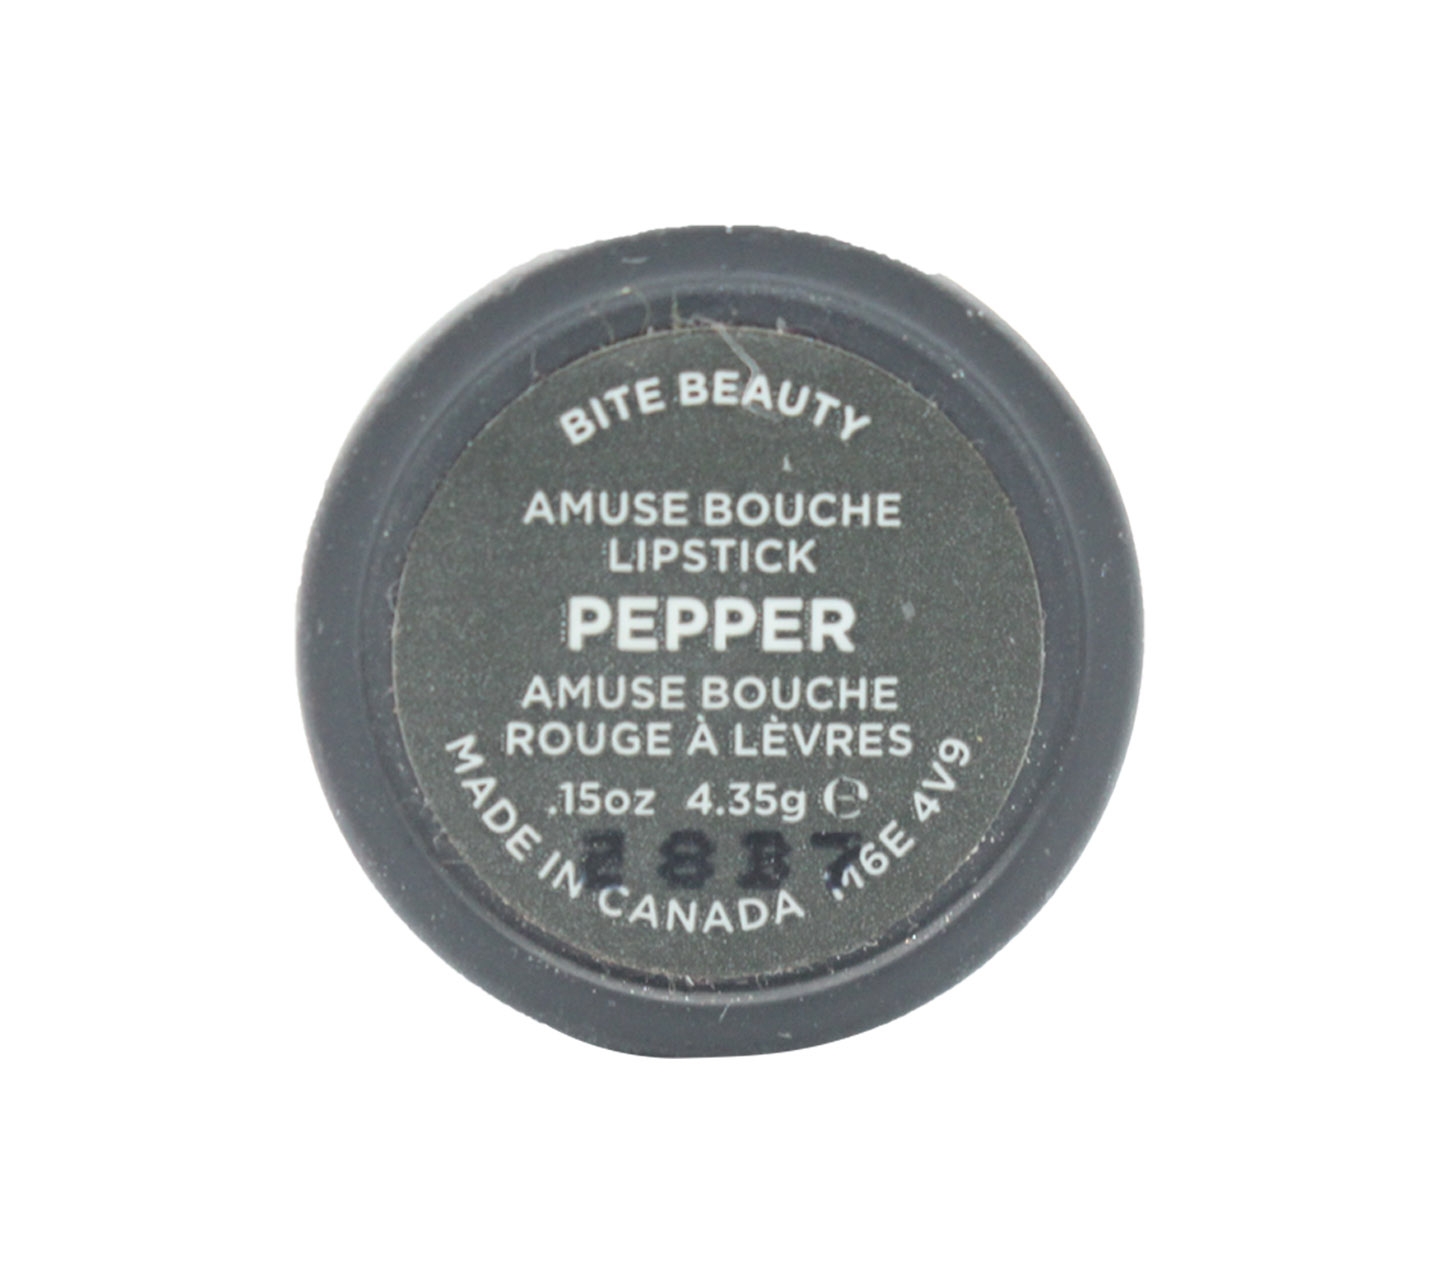 Bite Beauty Amuse Bouche Lipstick Pepper Lips